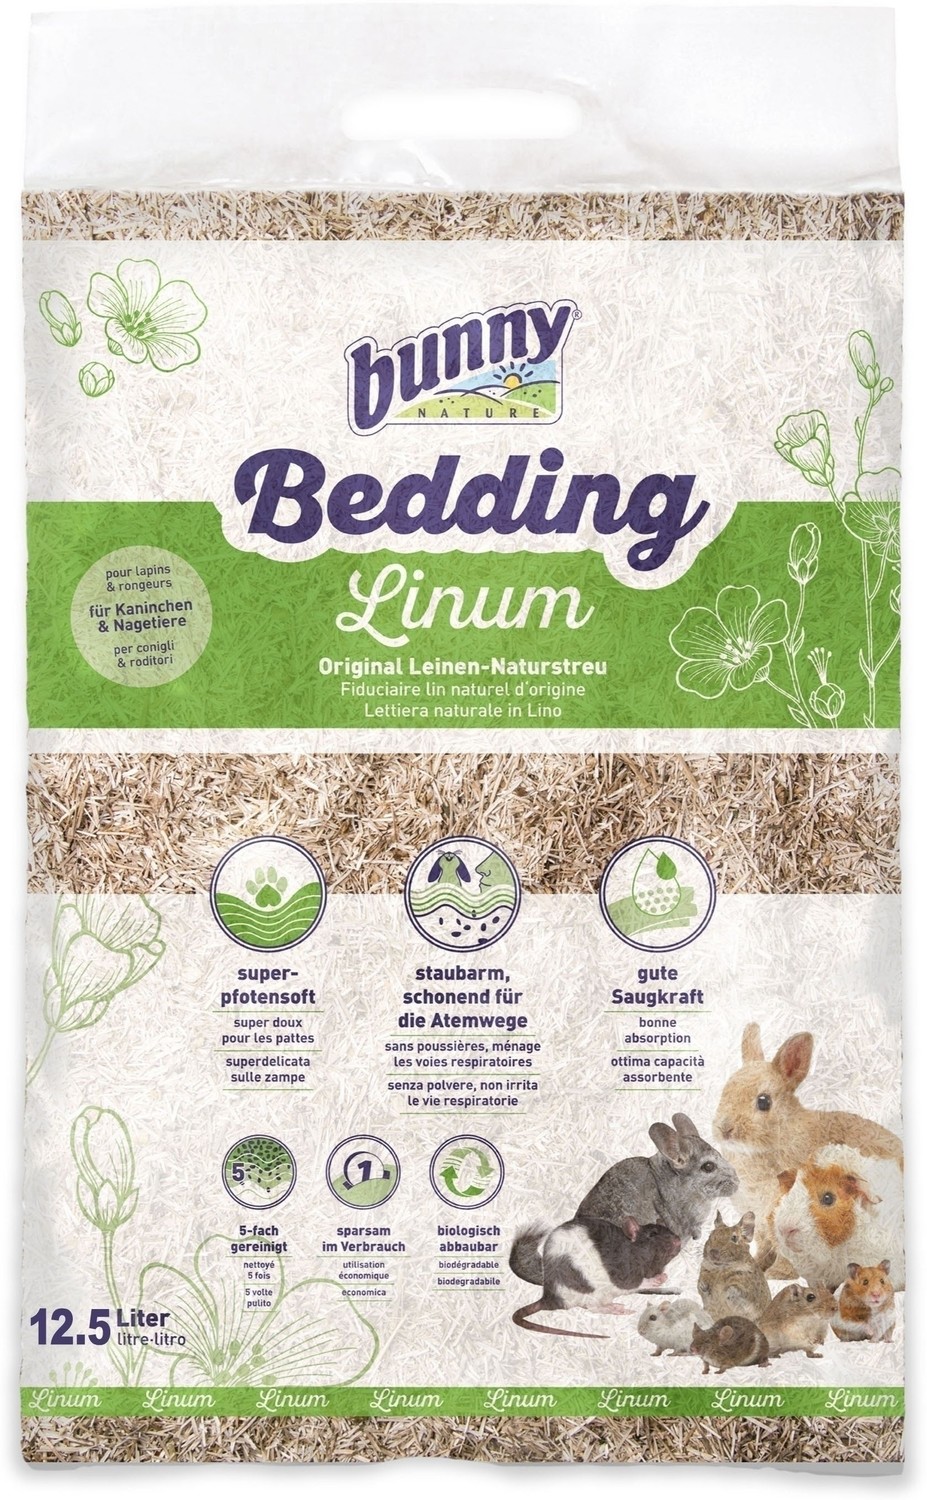 bunnyNature Bedding Linum